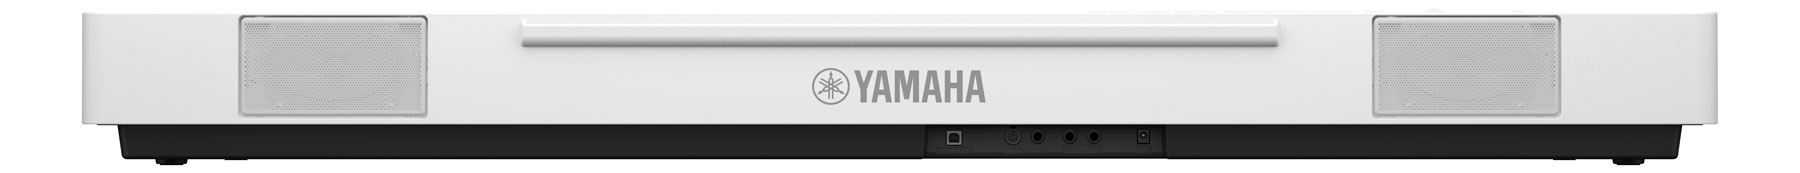 Yamaha P225, nuevos altavoces